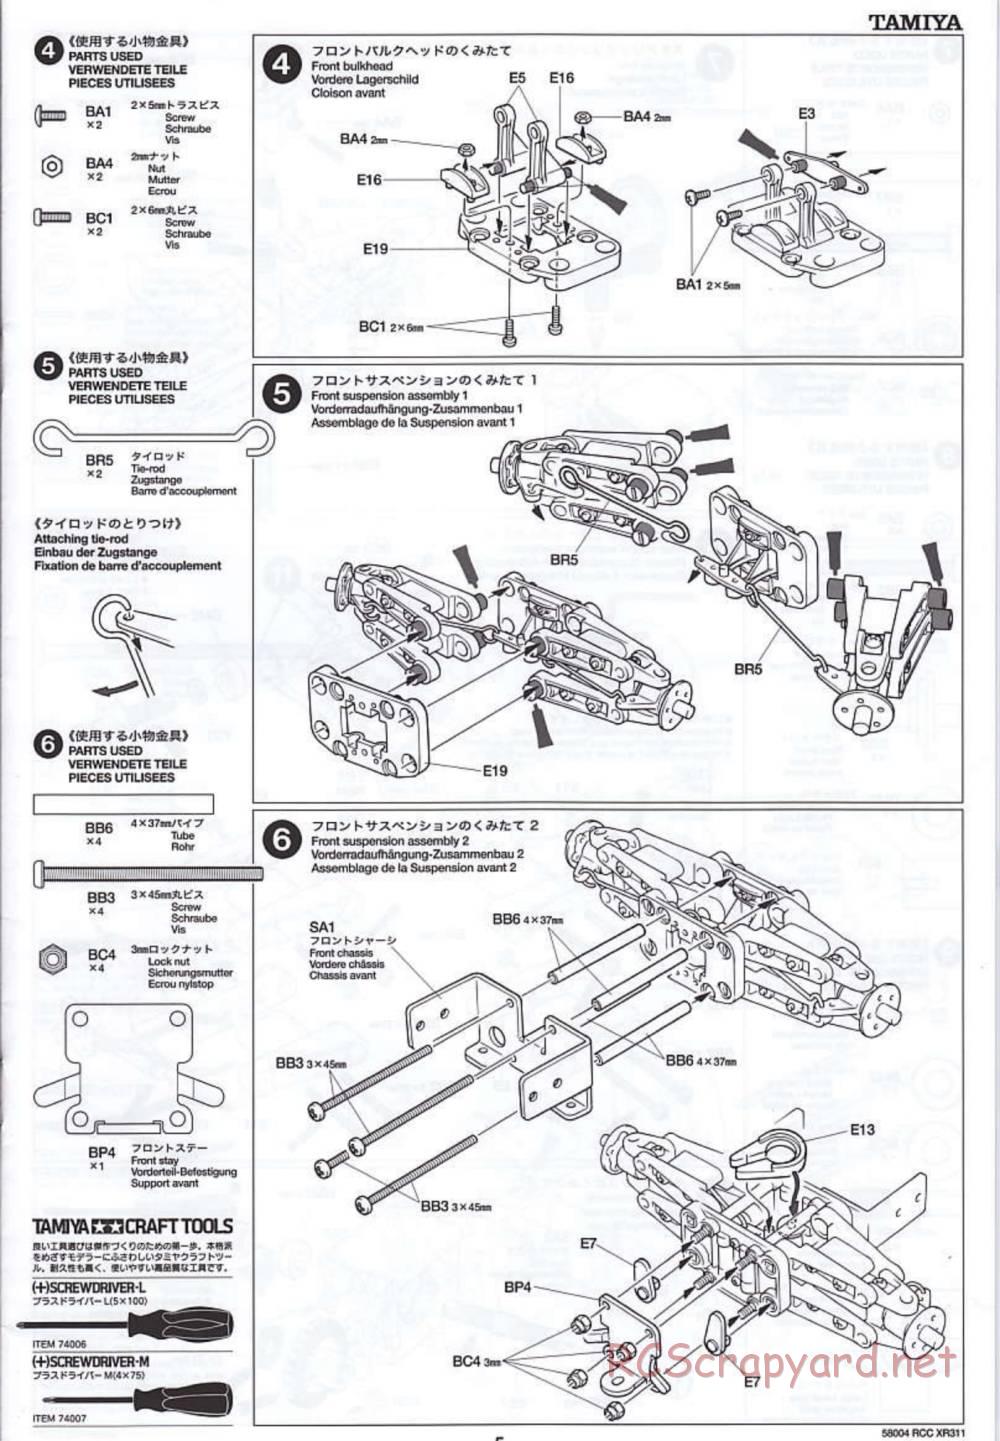 Tamiya - XR311 Combat Support Vehicle (2000) - 58004 - Manual - Page 6